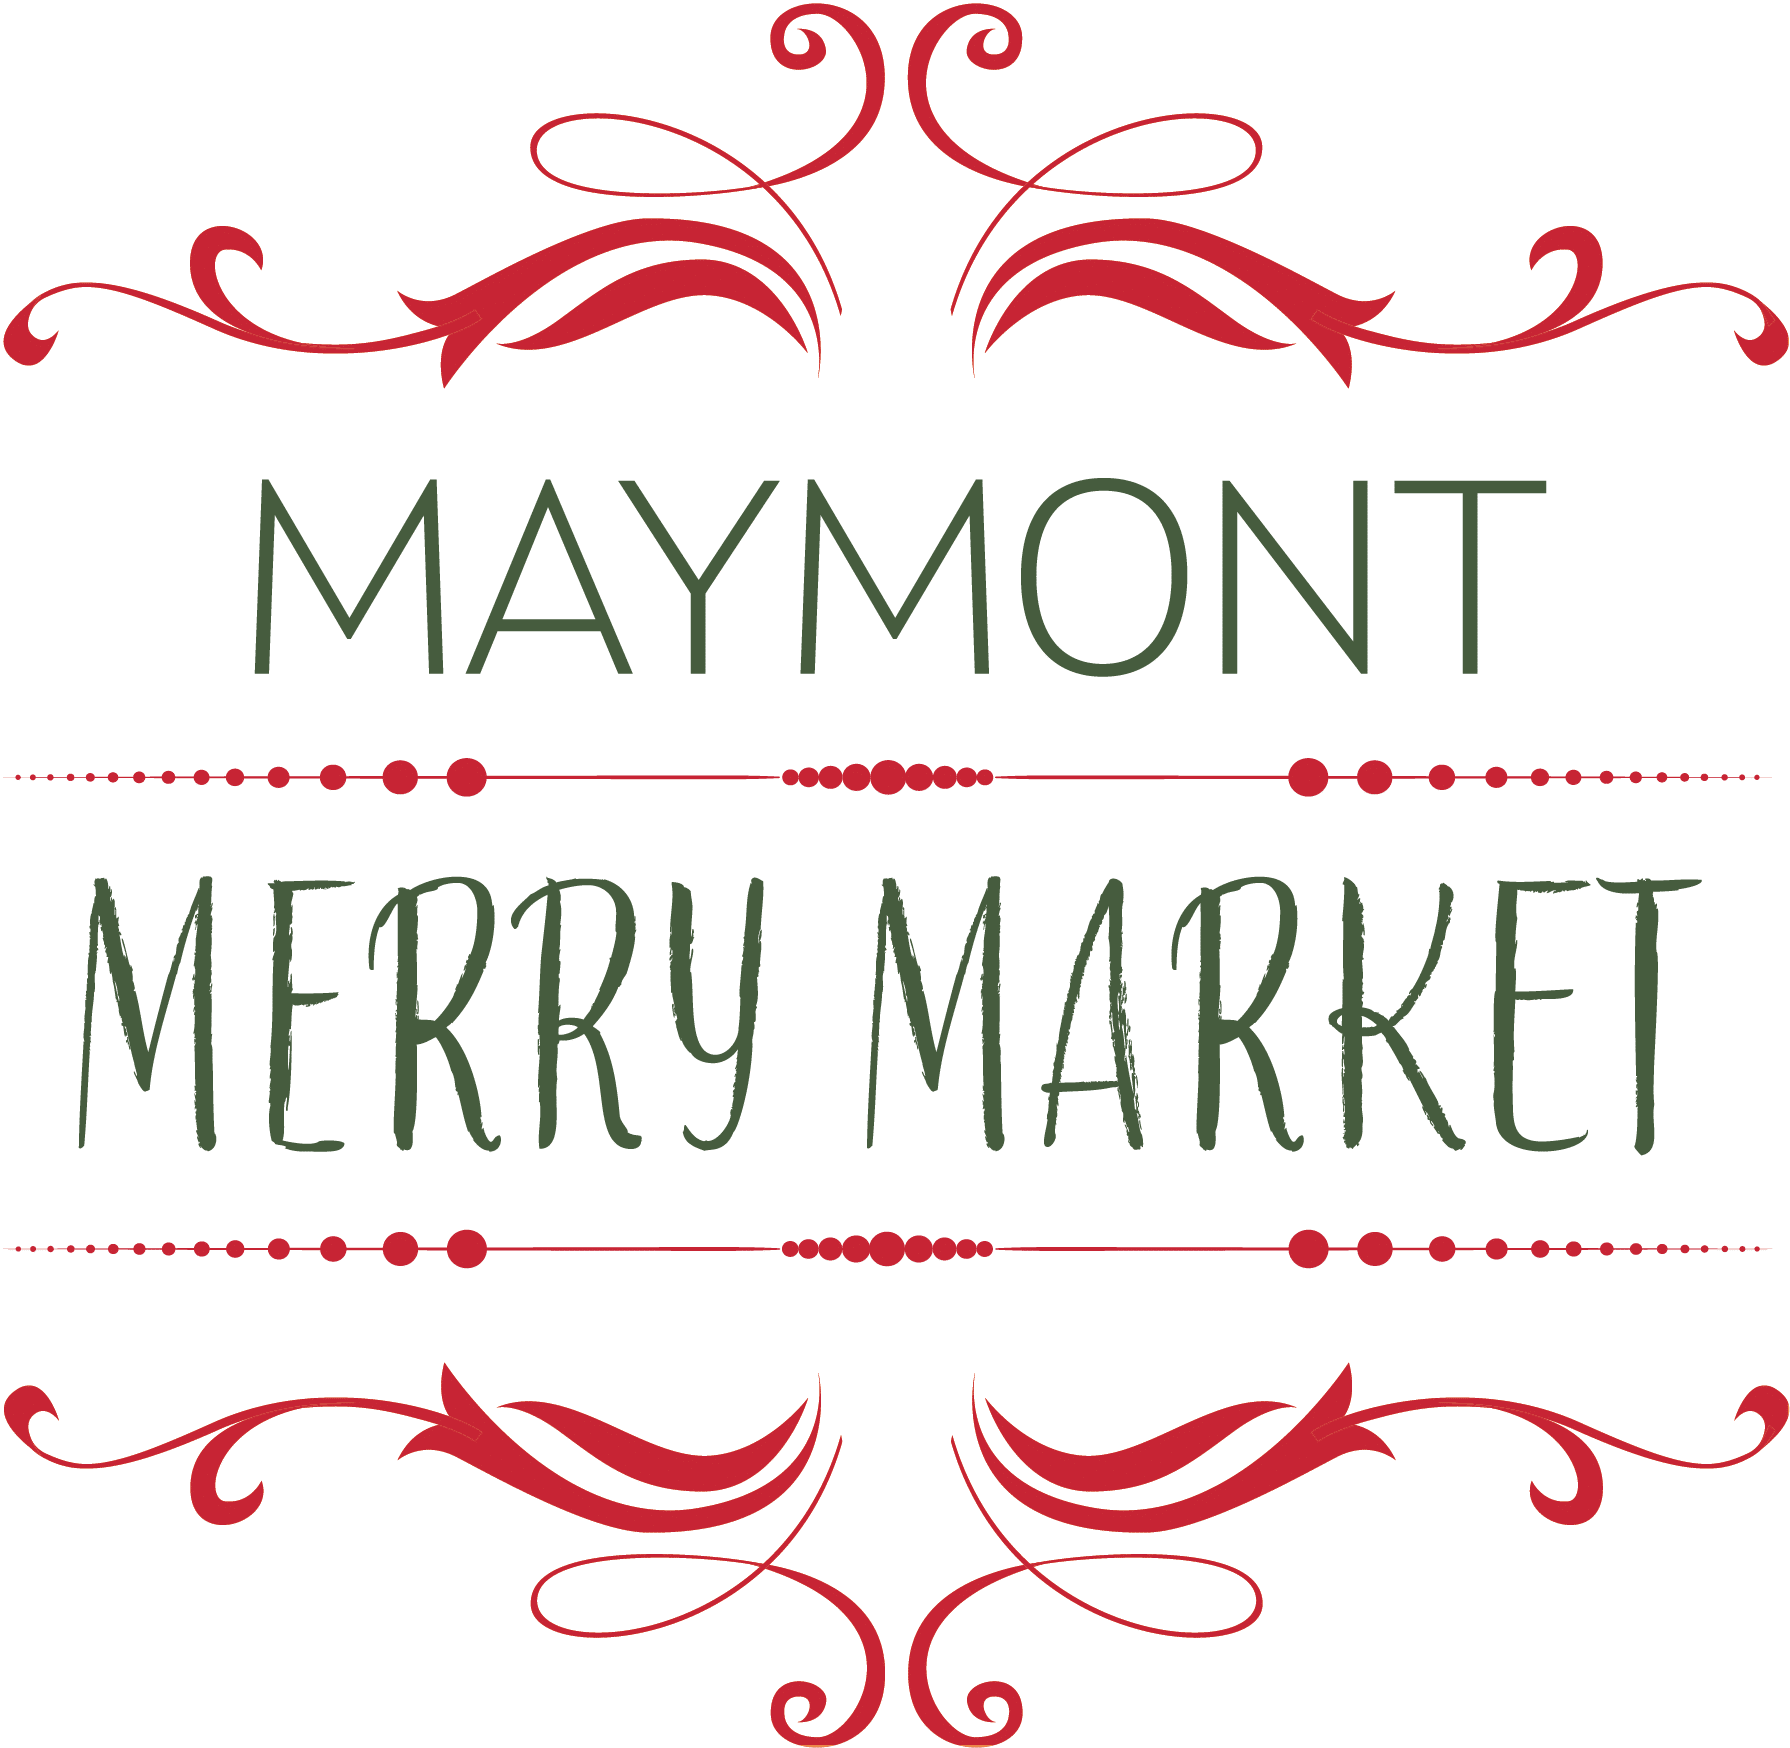 Merry Market Logo Redgreen